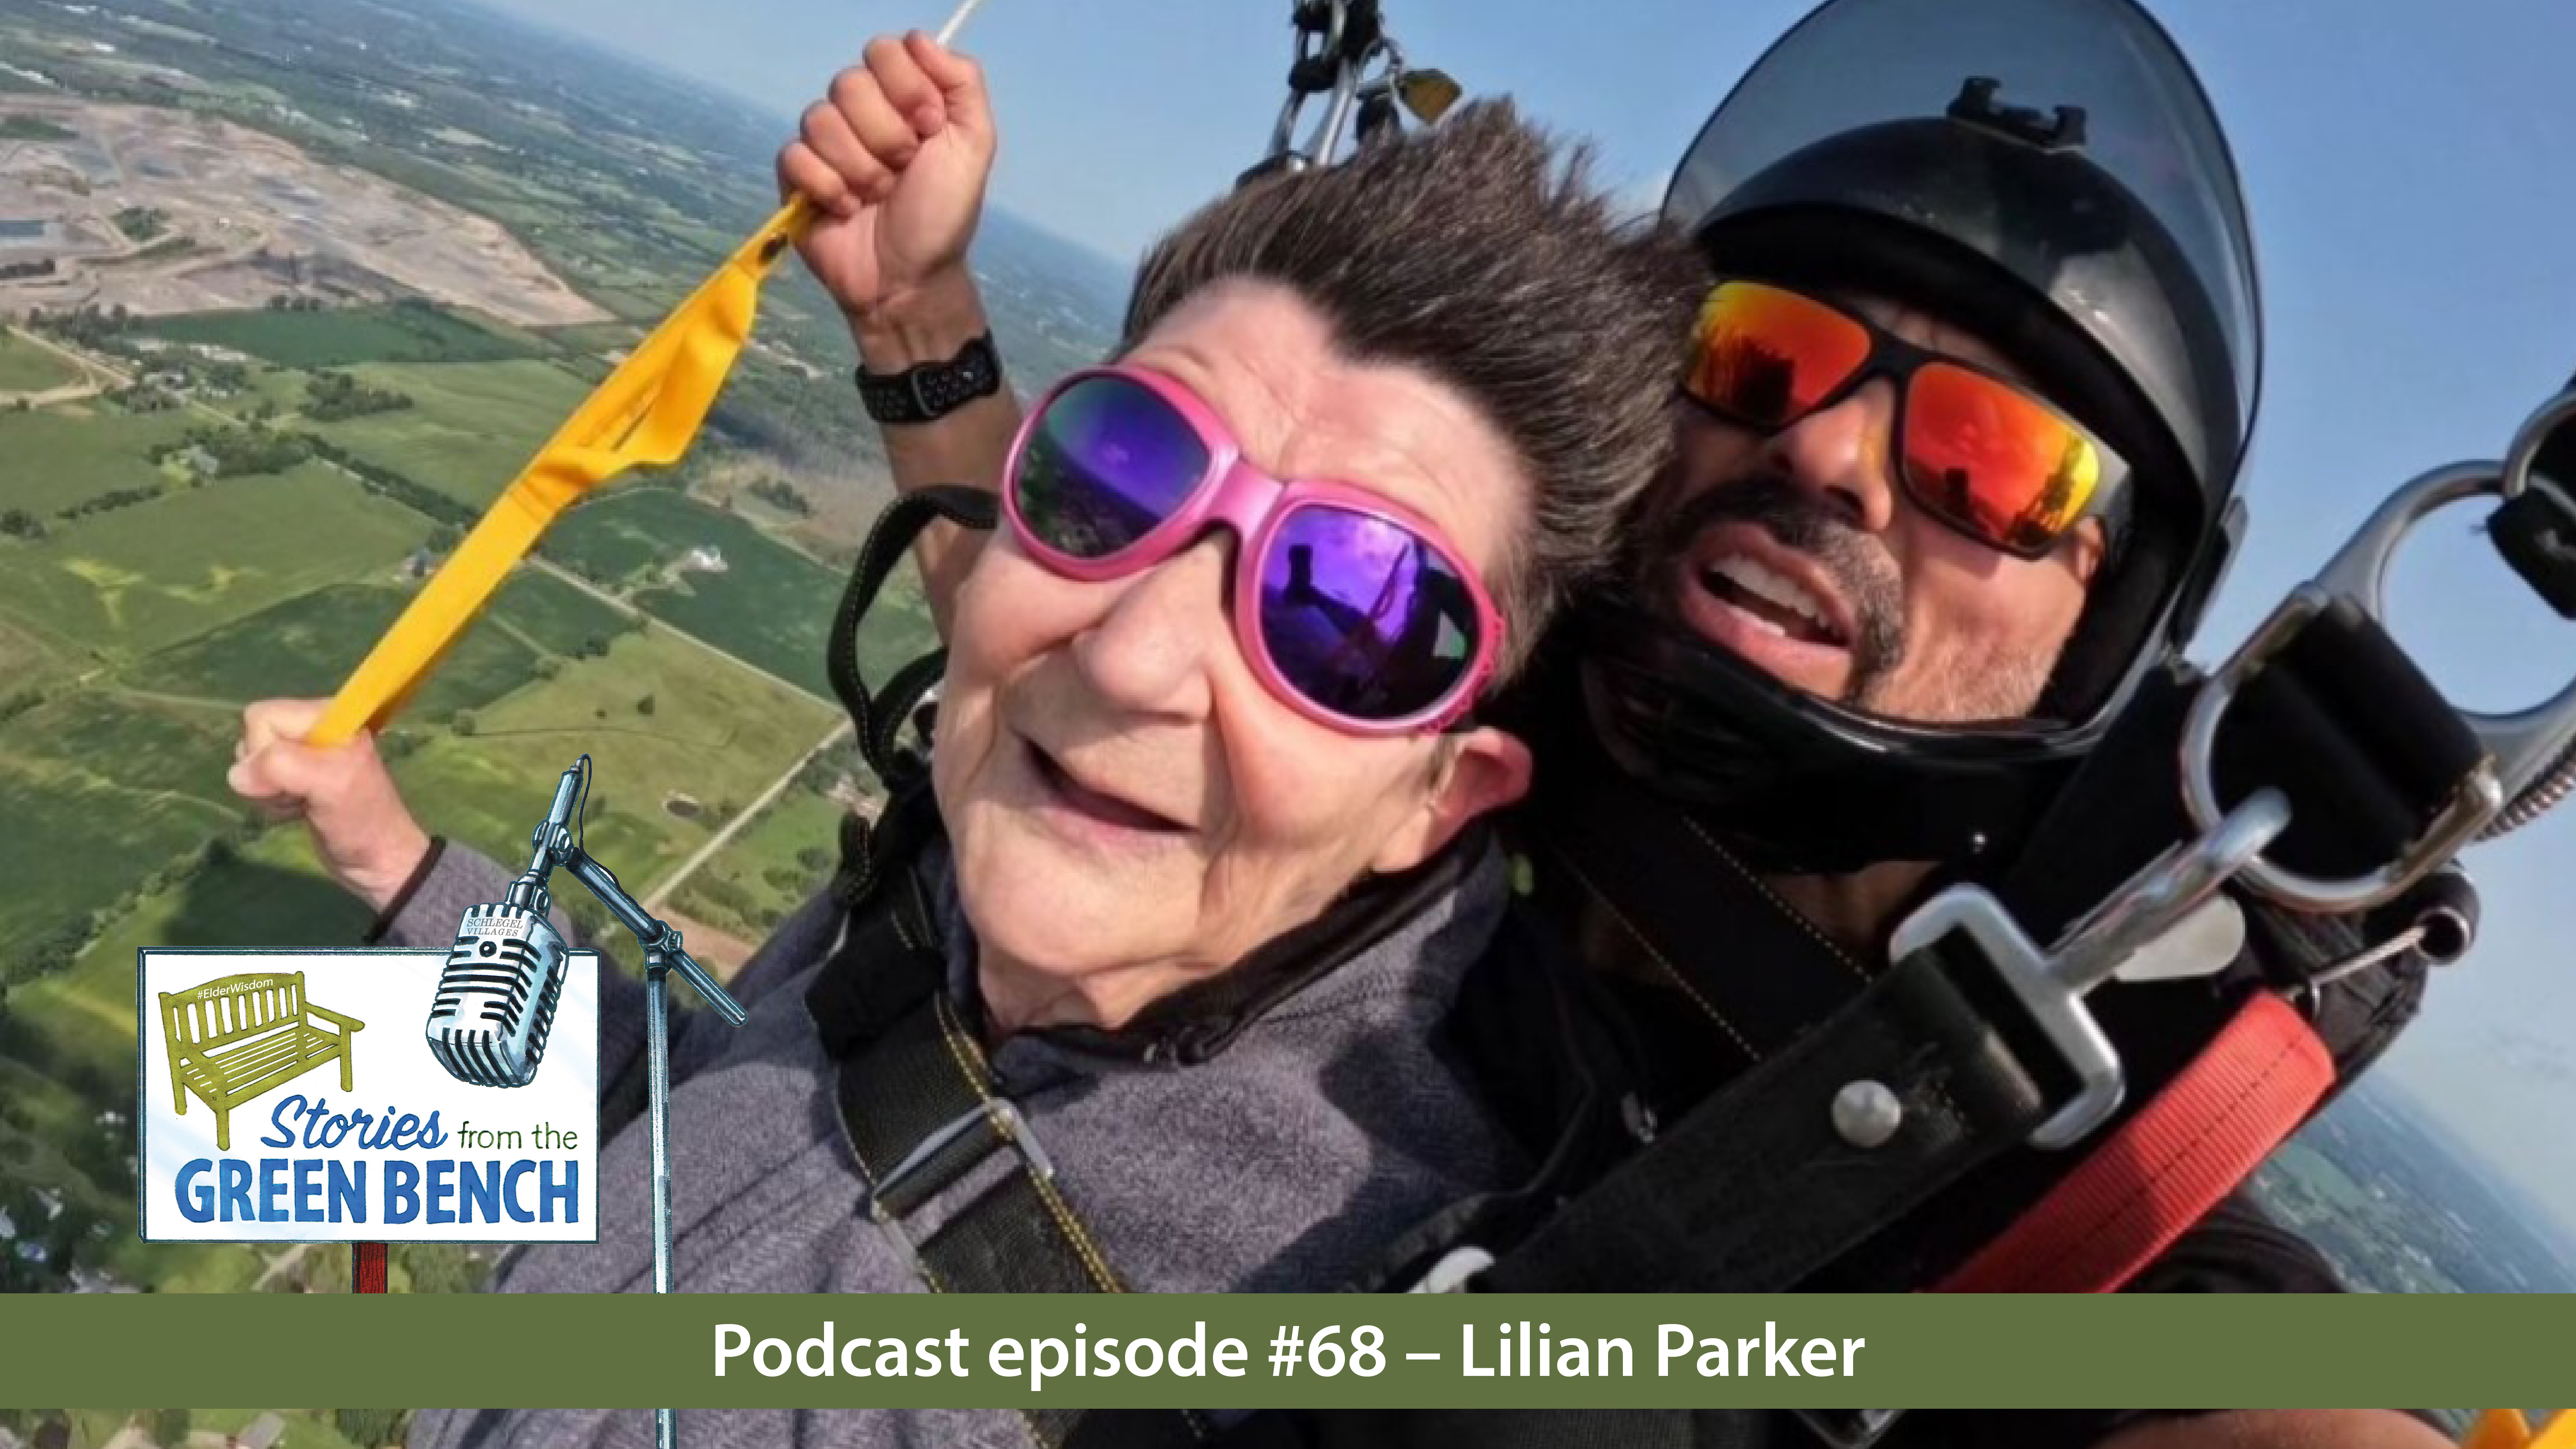 Lillian Parker skydiving, promotion for the #ElderWisdom podcast